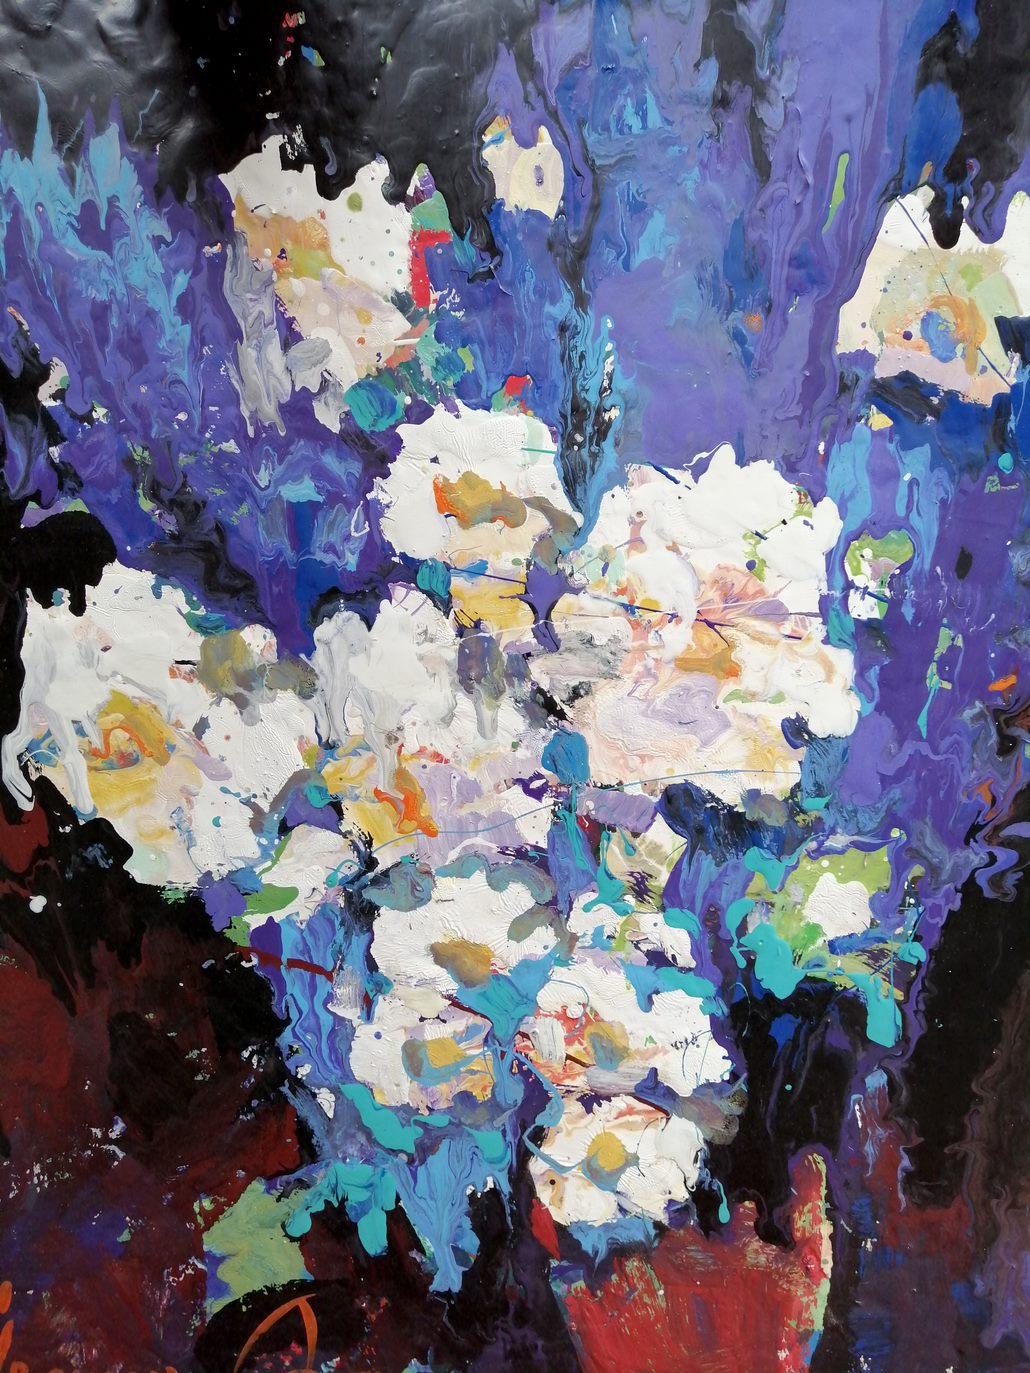 Artist: Alex Kalenyuk 
Work: Original oil painting, handmade artwork, one of a kind 
Medium: Oil on canvas 
Year: 2018
Style: Impressionism
Title: Morning Flowers, 
Size: 29.5